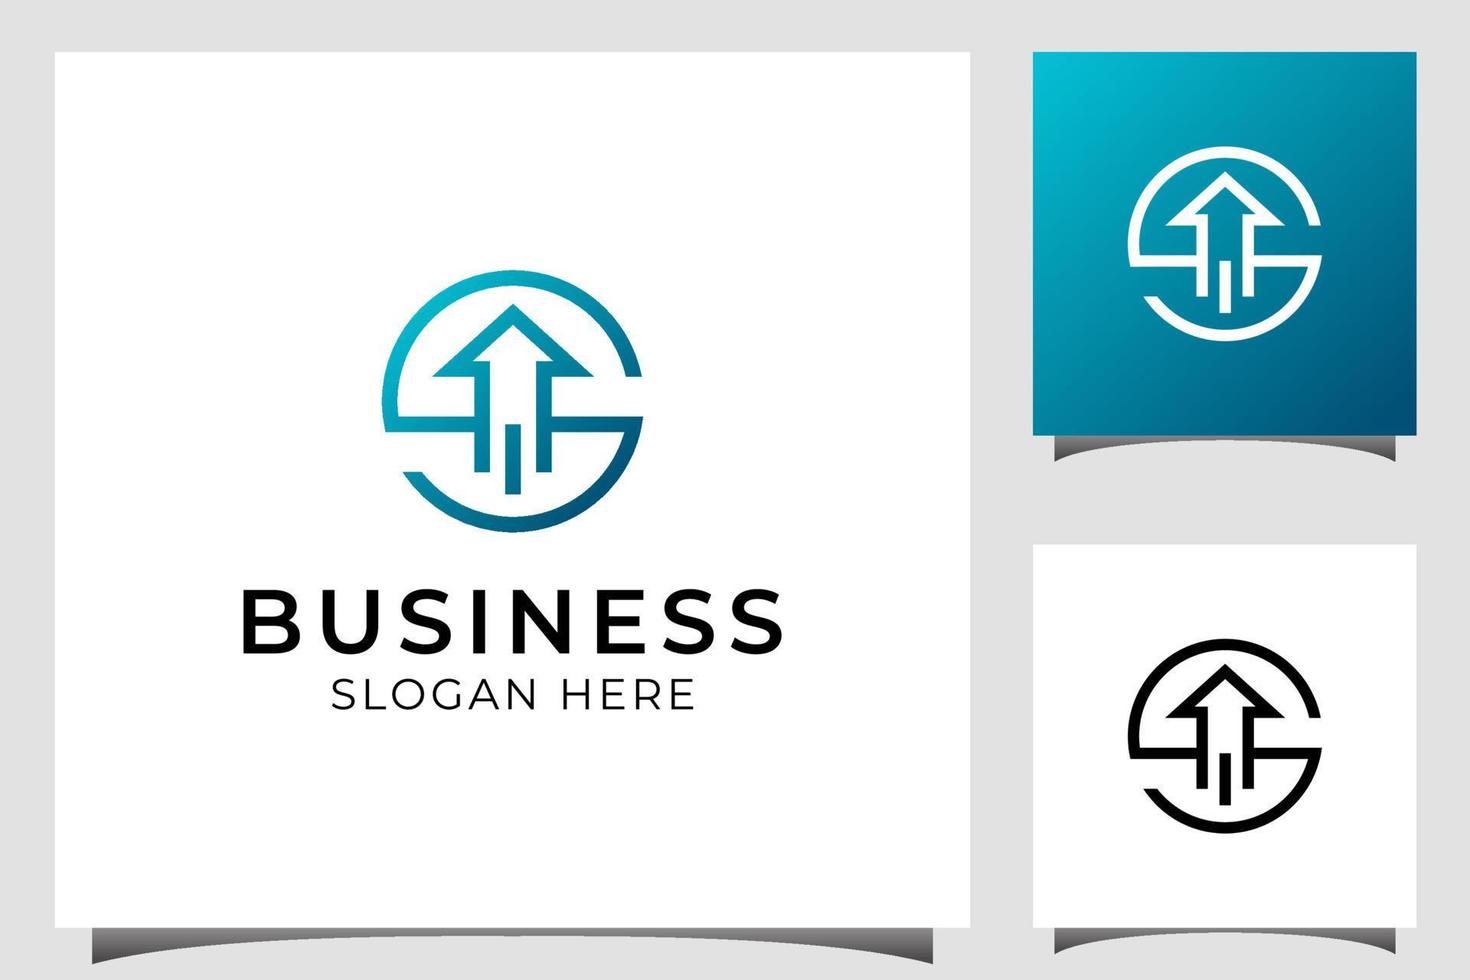 anfangsbuchstabe s business start up logo design mit pfeil oben symbol symbol für marketing, verkäufer logo vektor